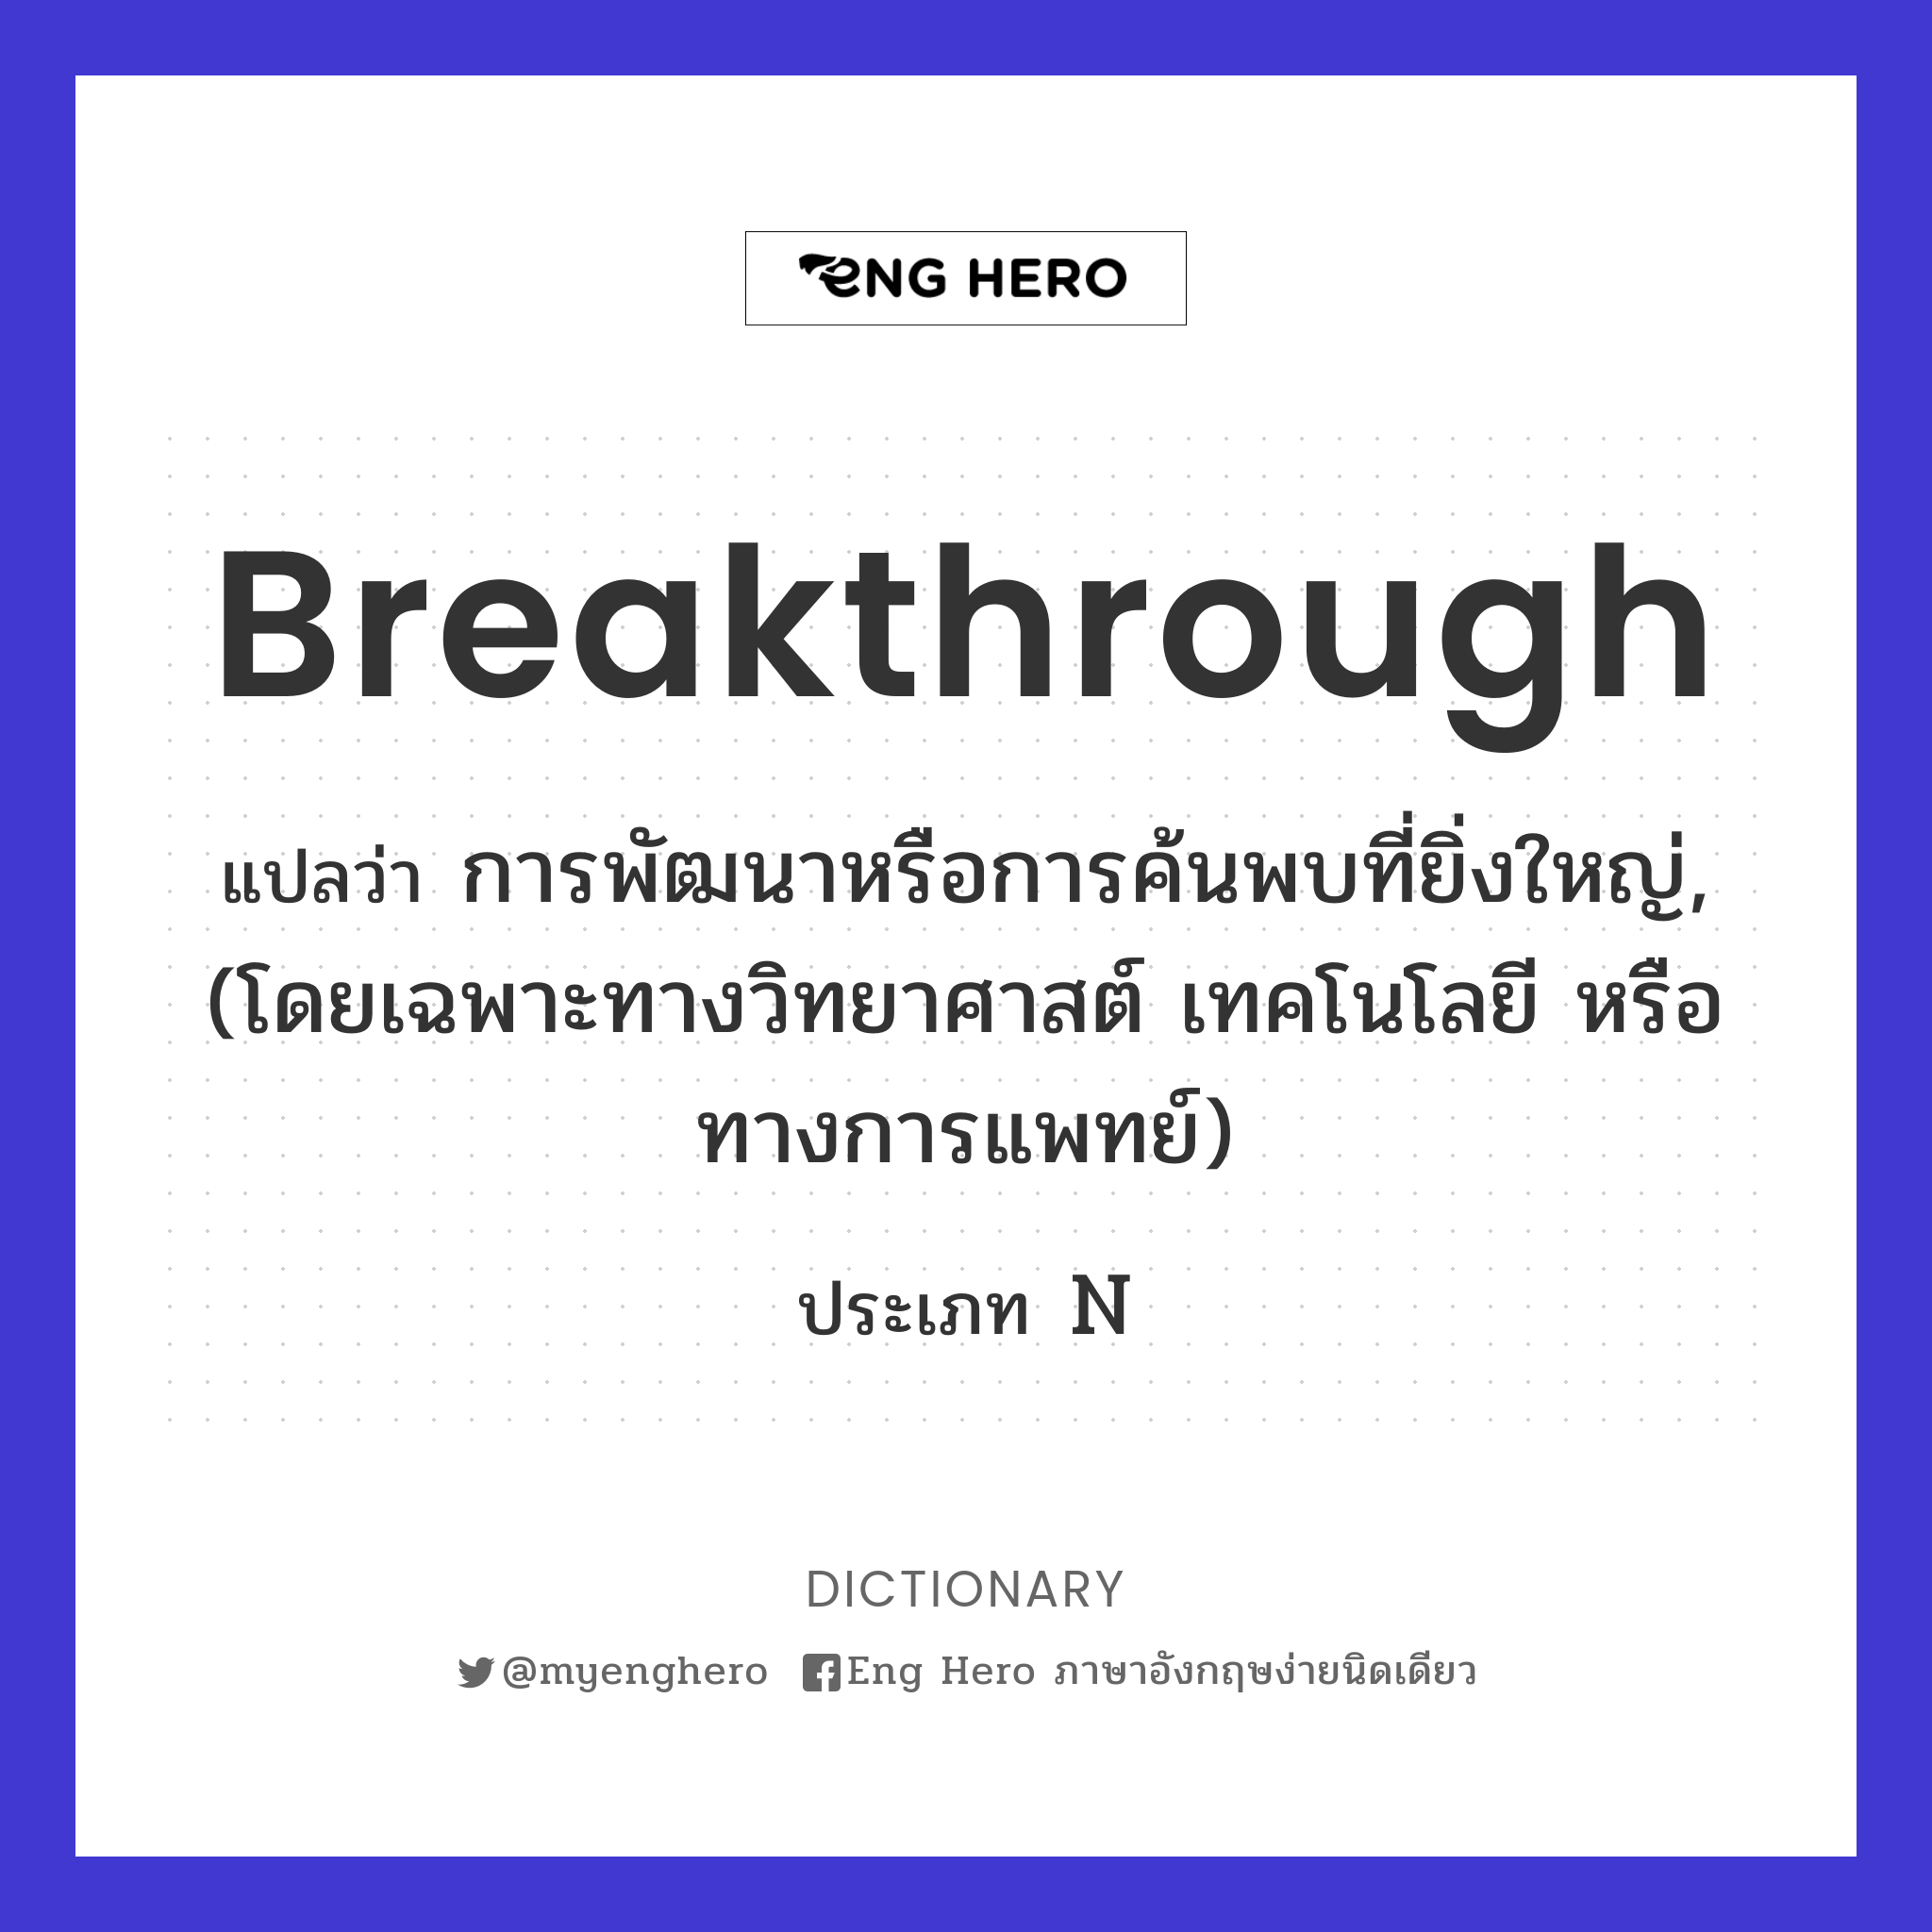 breakthrough